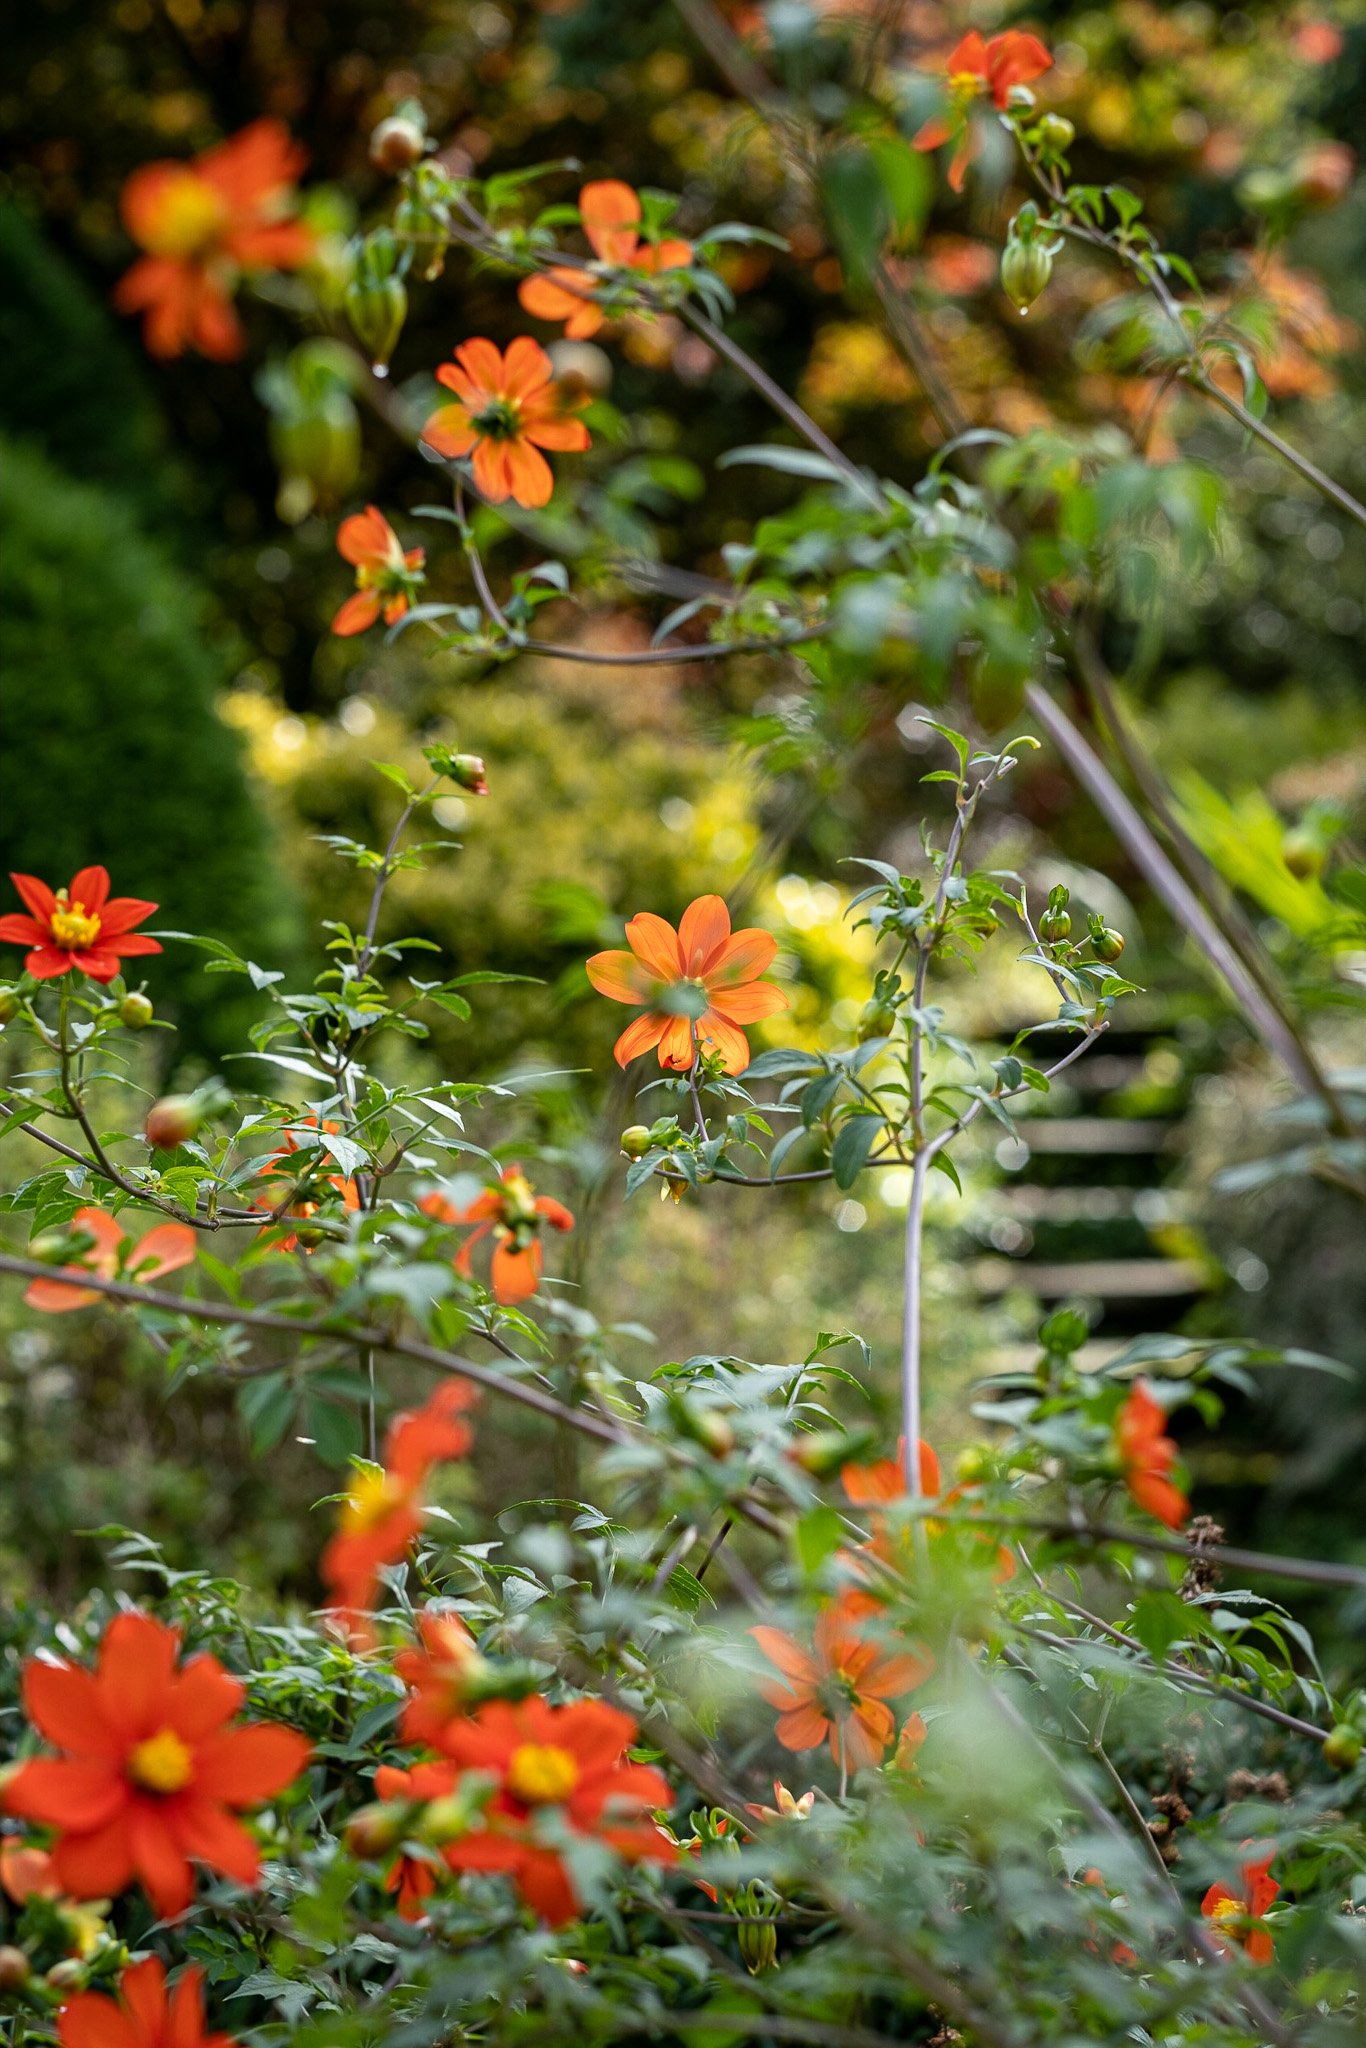 Plant Photography at The Garden House, Devon